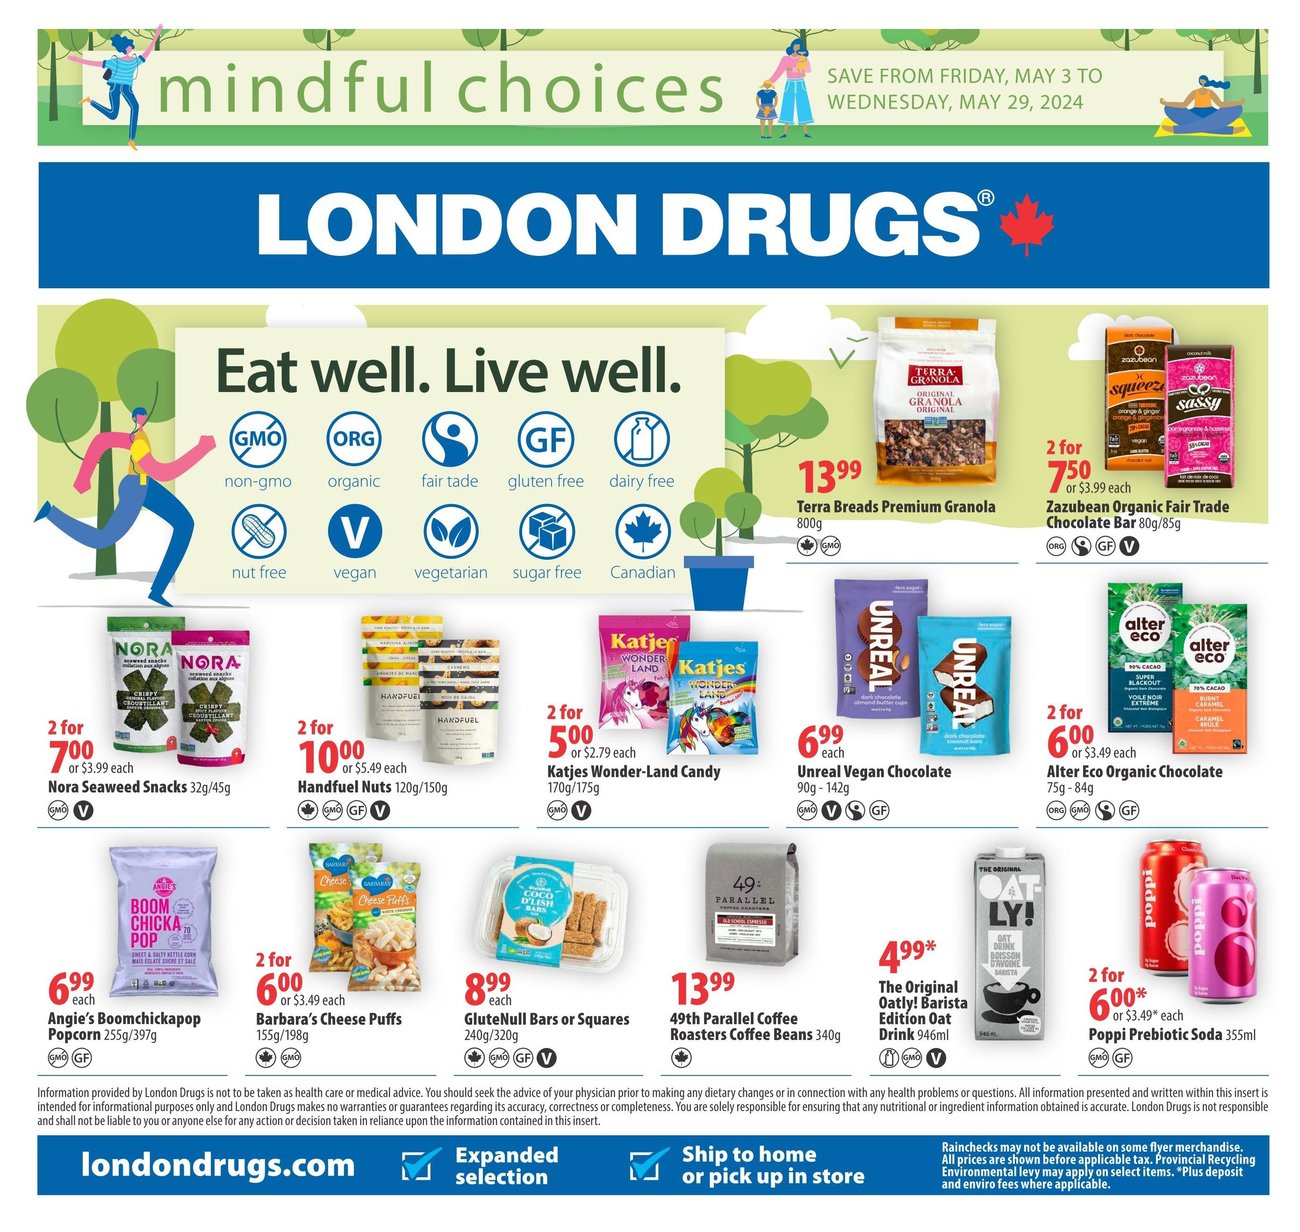 London Drugs - Mindful Choice - Page 1